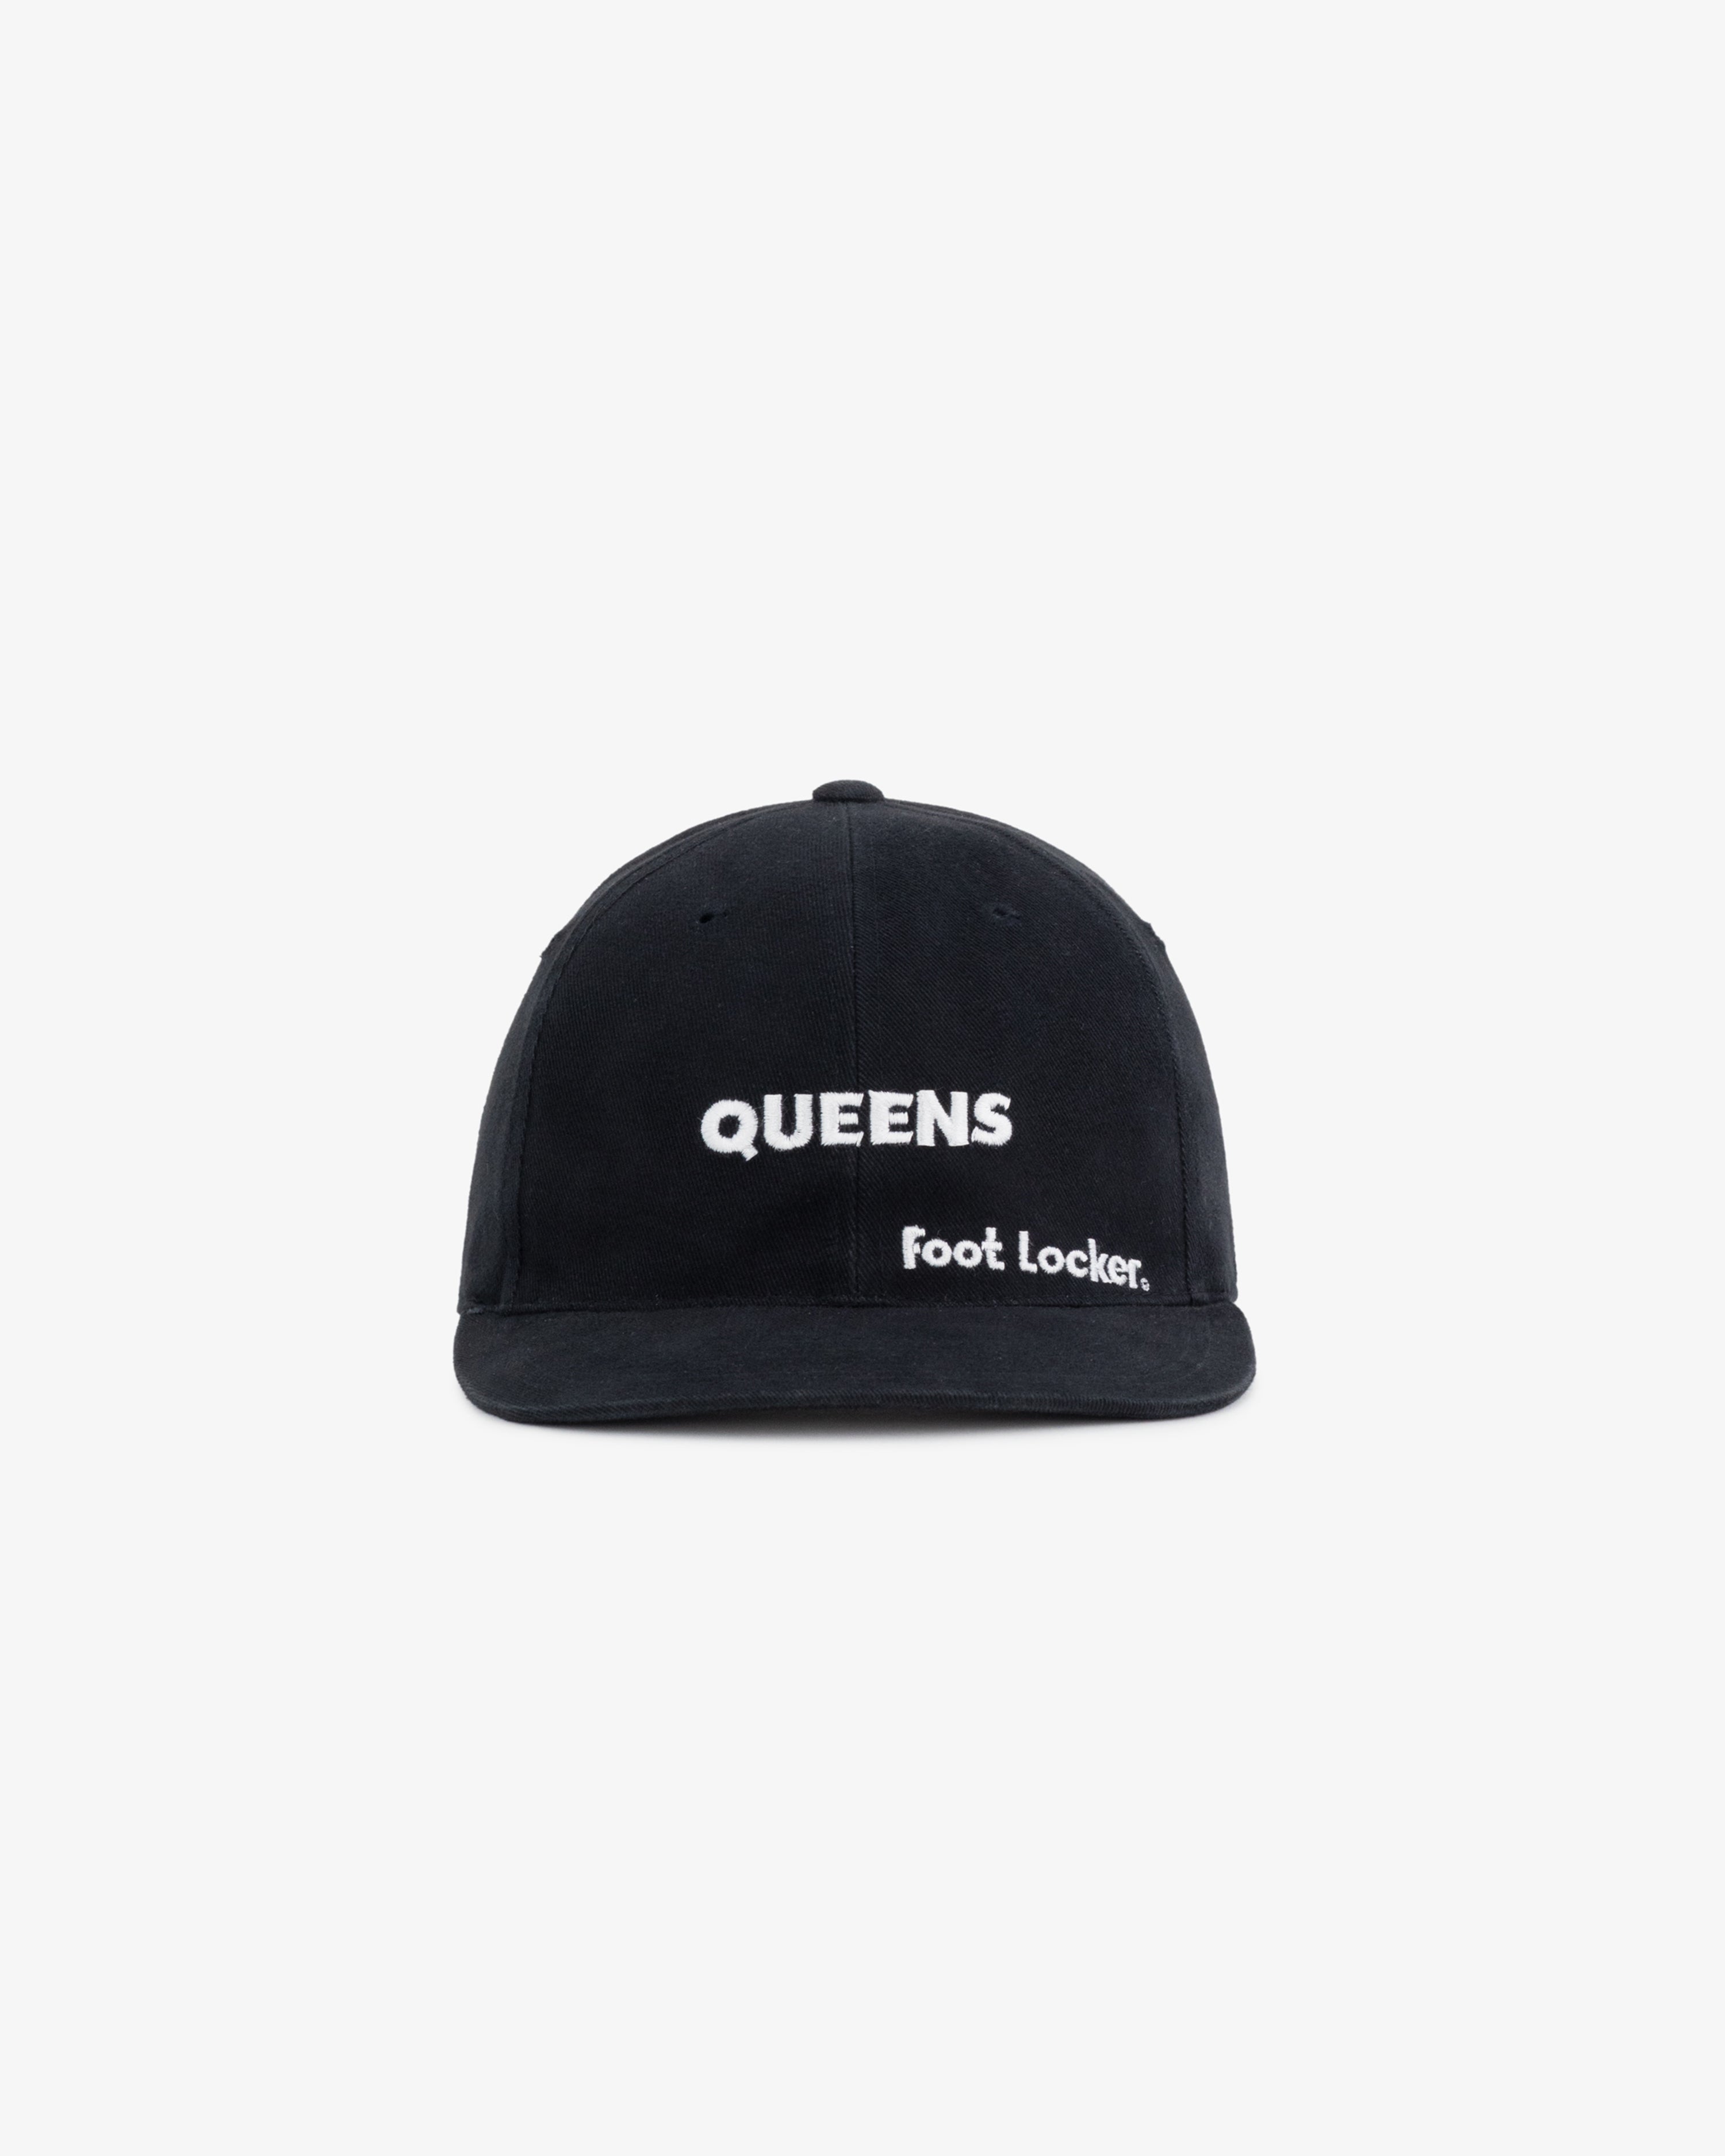 Queens Footlocker Hat at AimeLeonDore.com